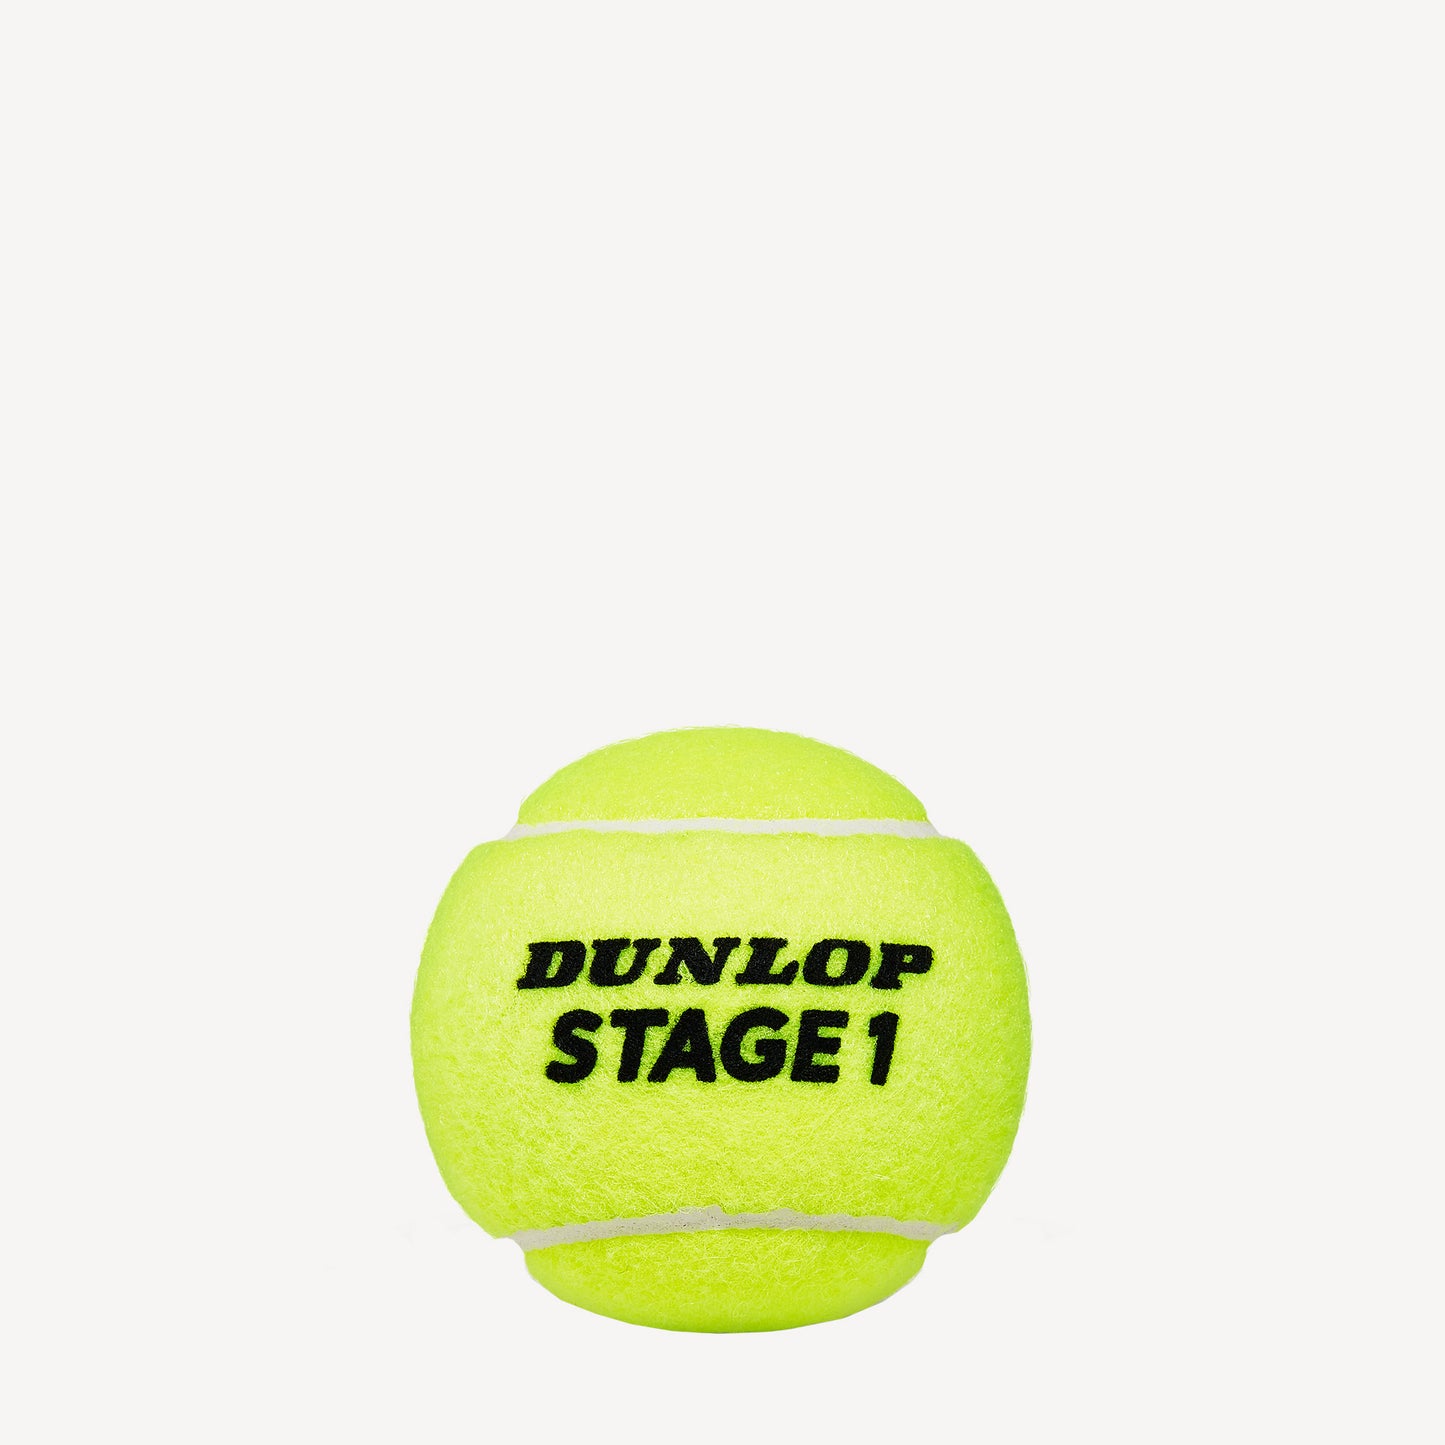 Dunlop Stage 1 Green 3 Tennis Balls 2